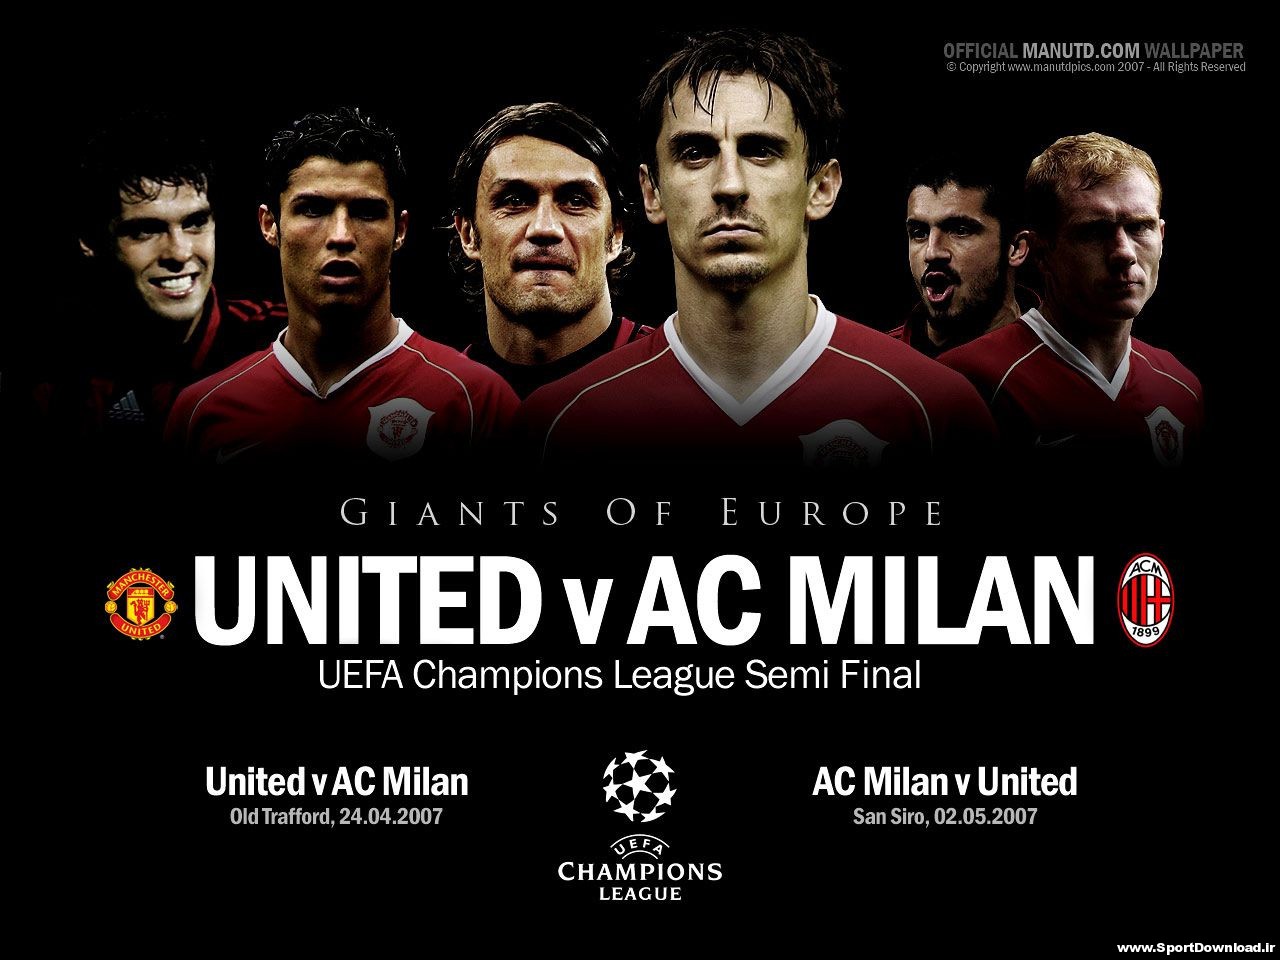 Man United vs AC Milan 2007